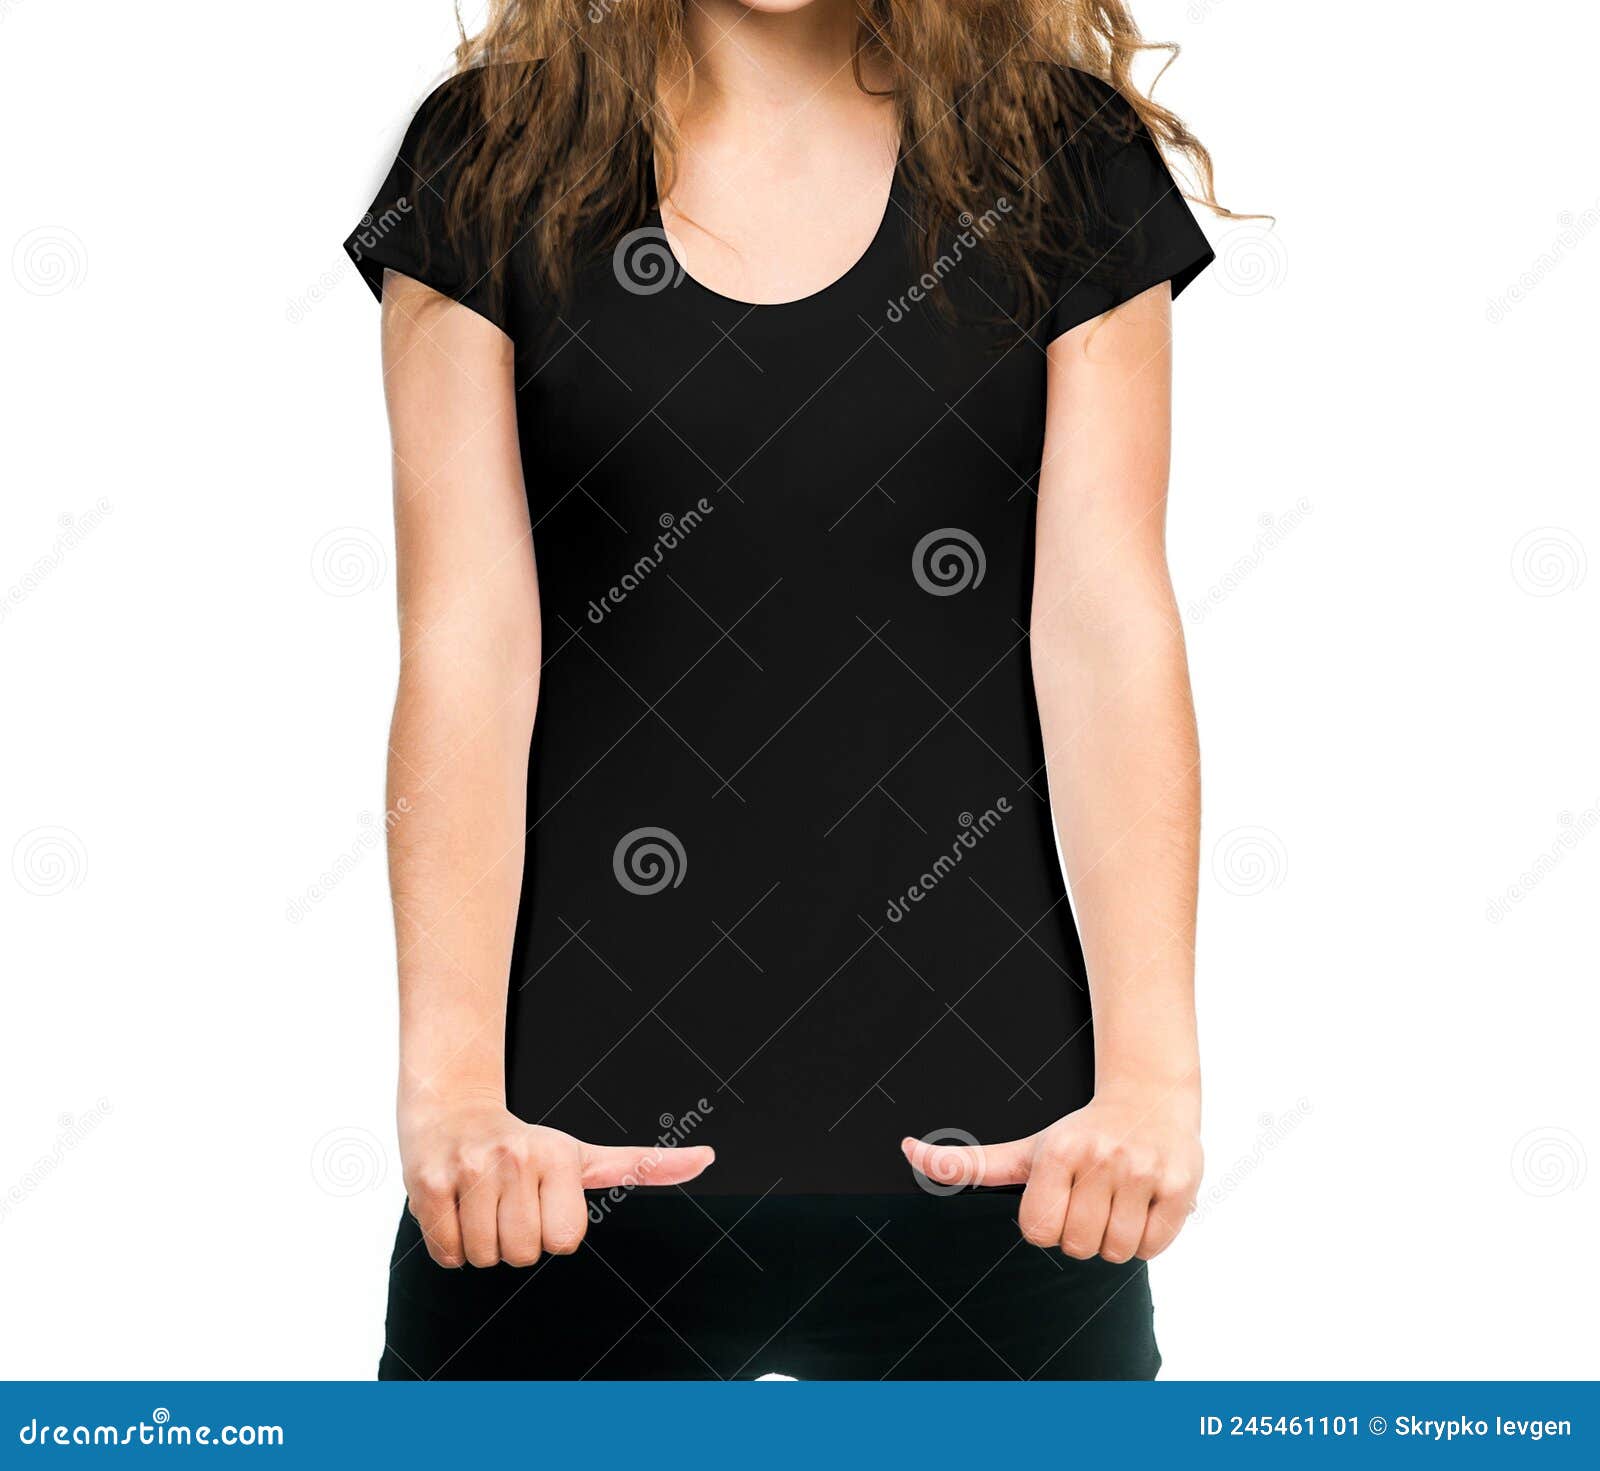 Pronombre Accidental Decano Chica con camiseta negra imagen de archivo. Imagen de frente - 245461101